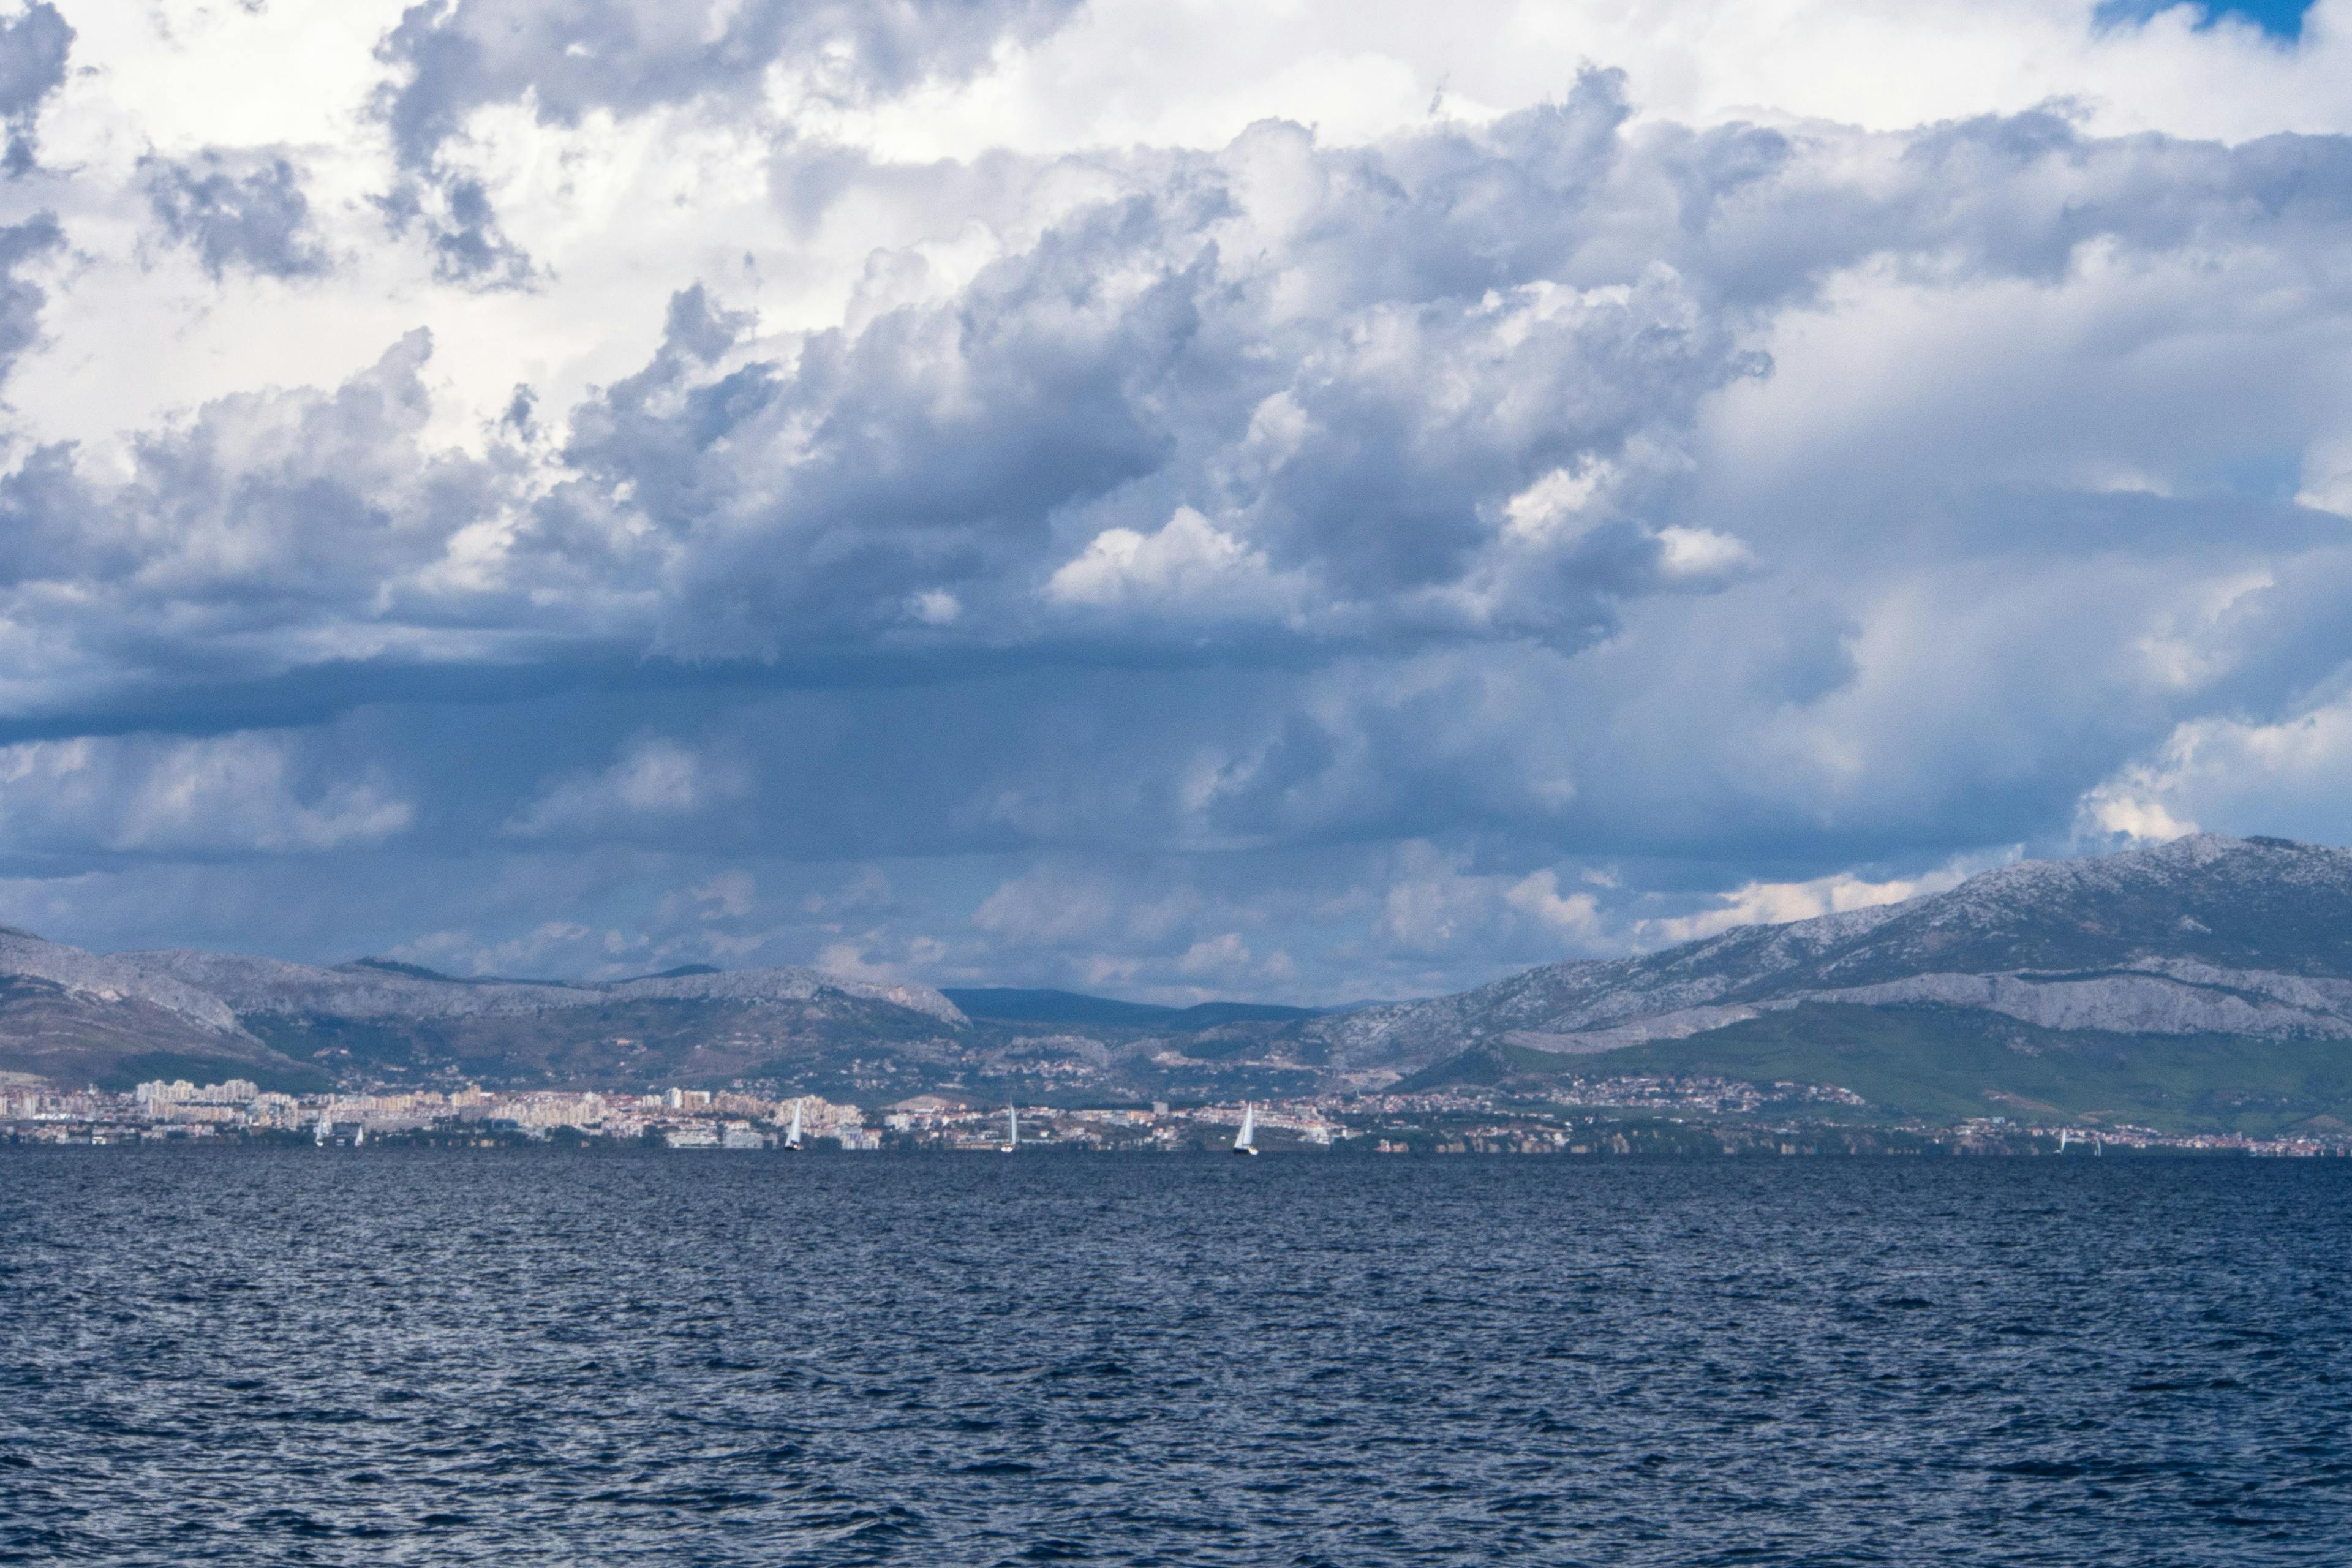 Central Dalmatian Coast in September